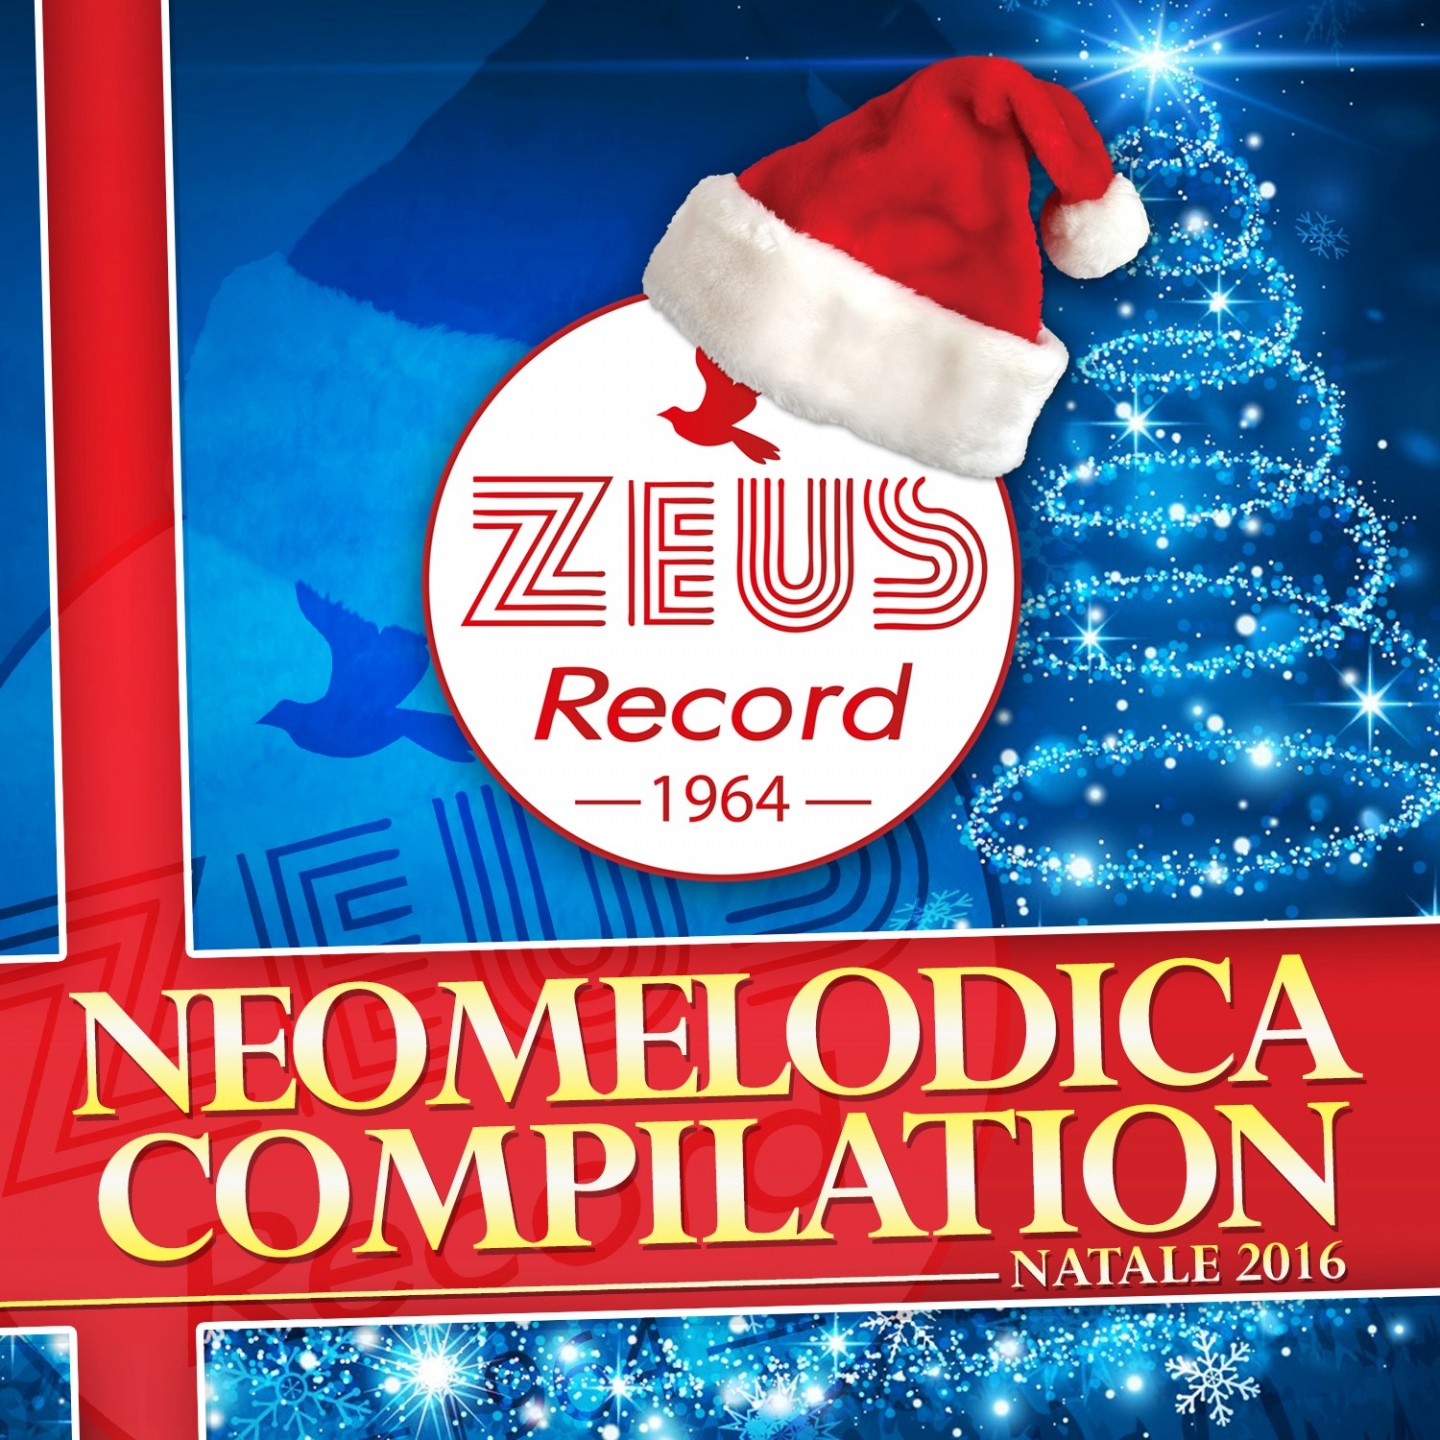 Neomelodica compilation